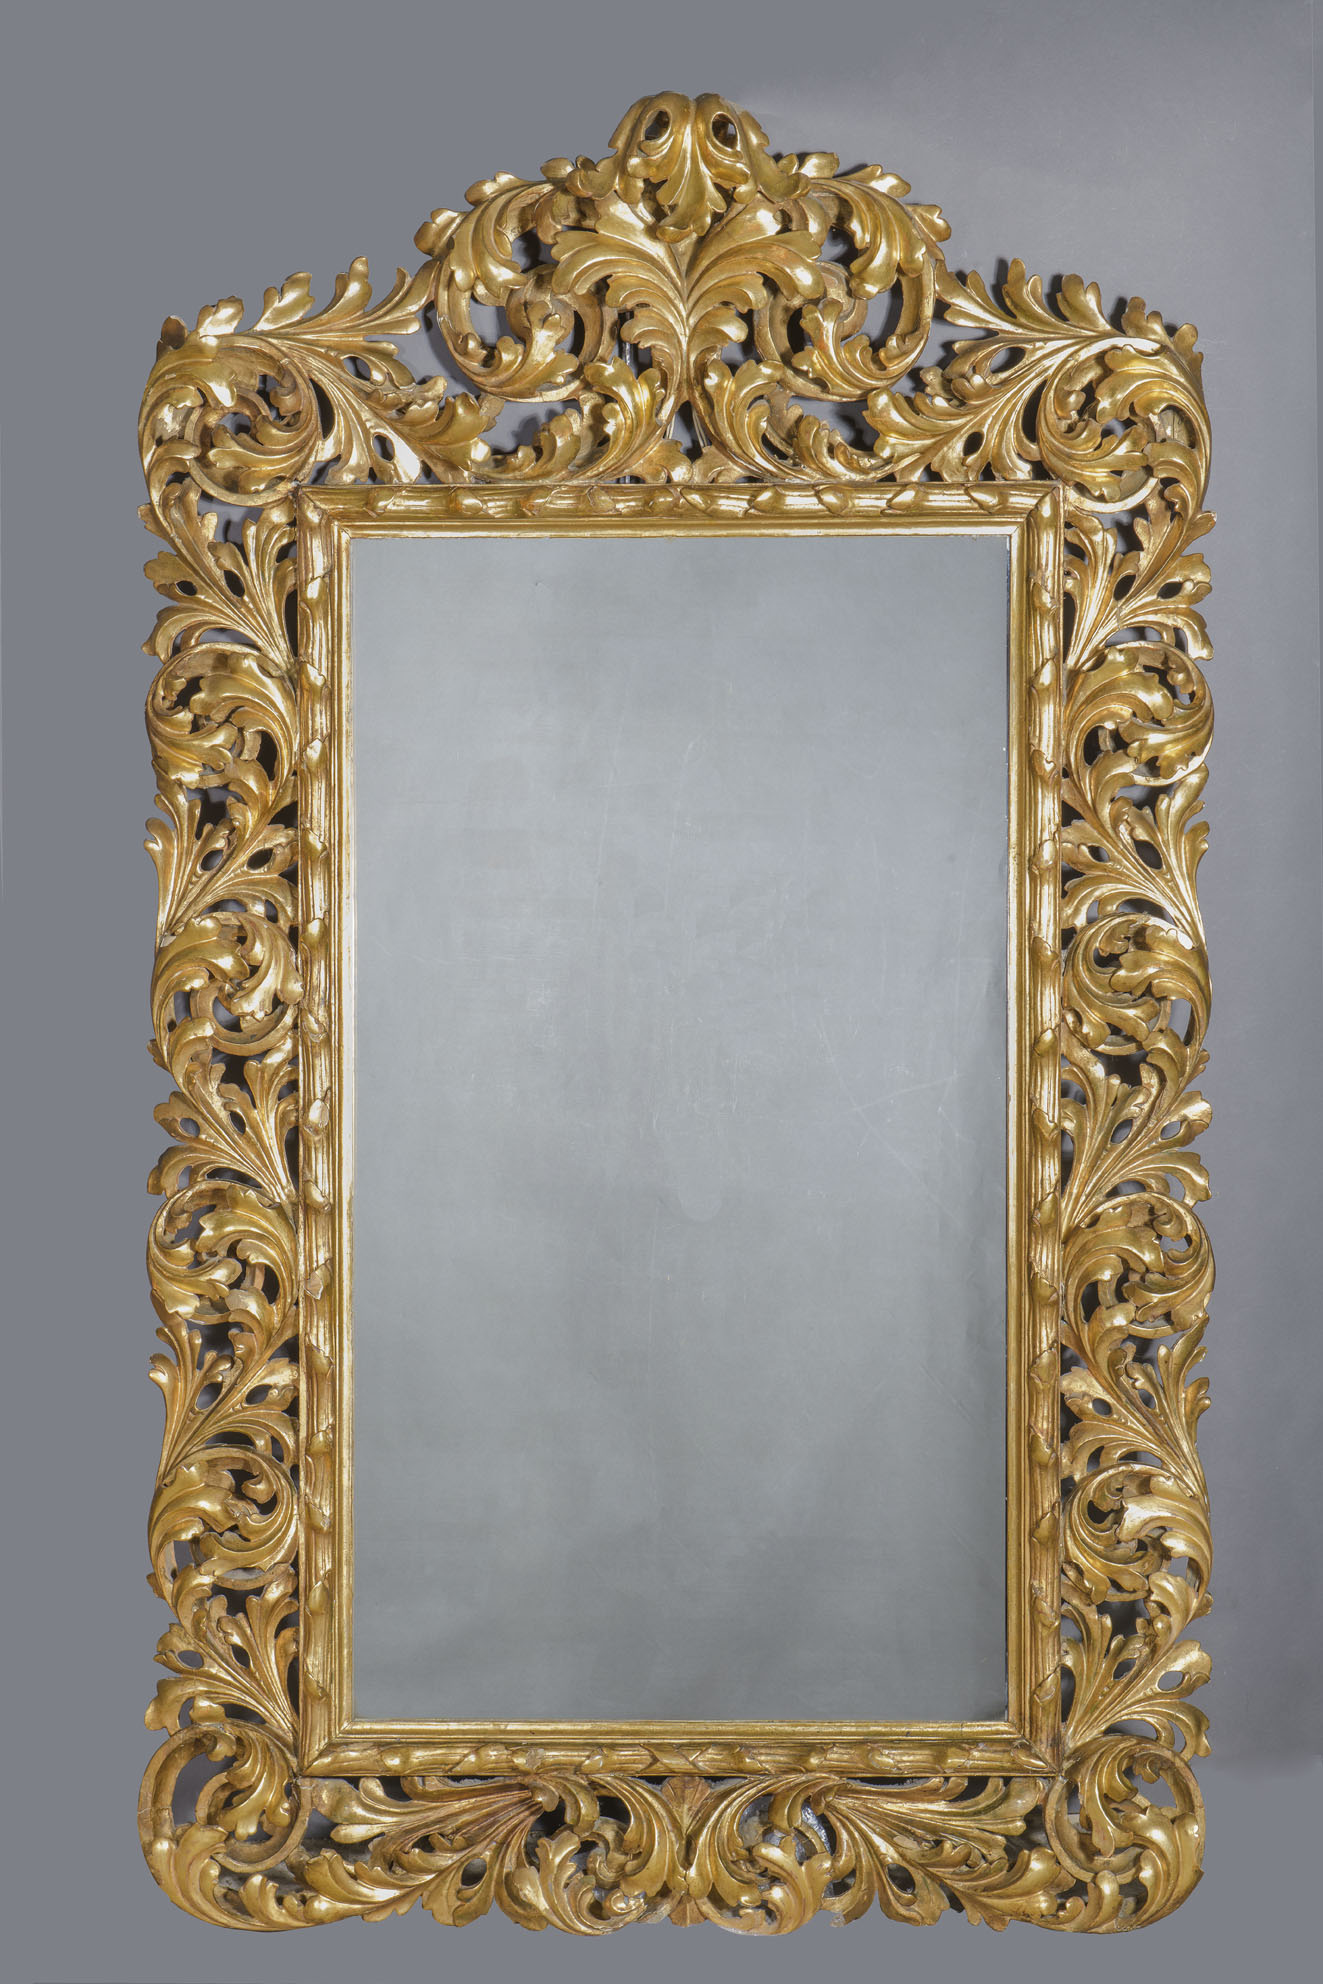 Large gilded wood mirror for sale on Egidi MadeinItaly